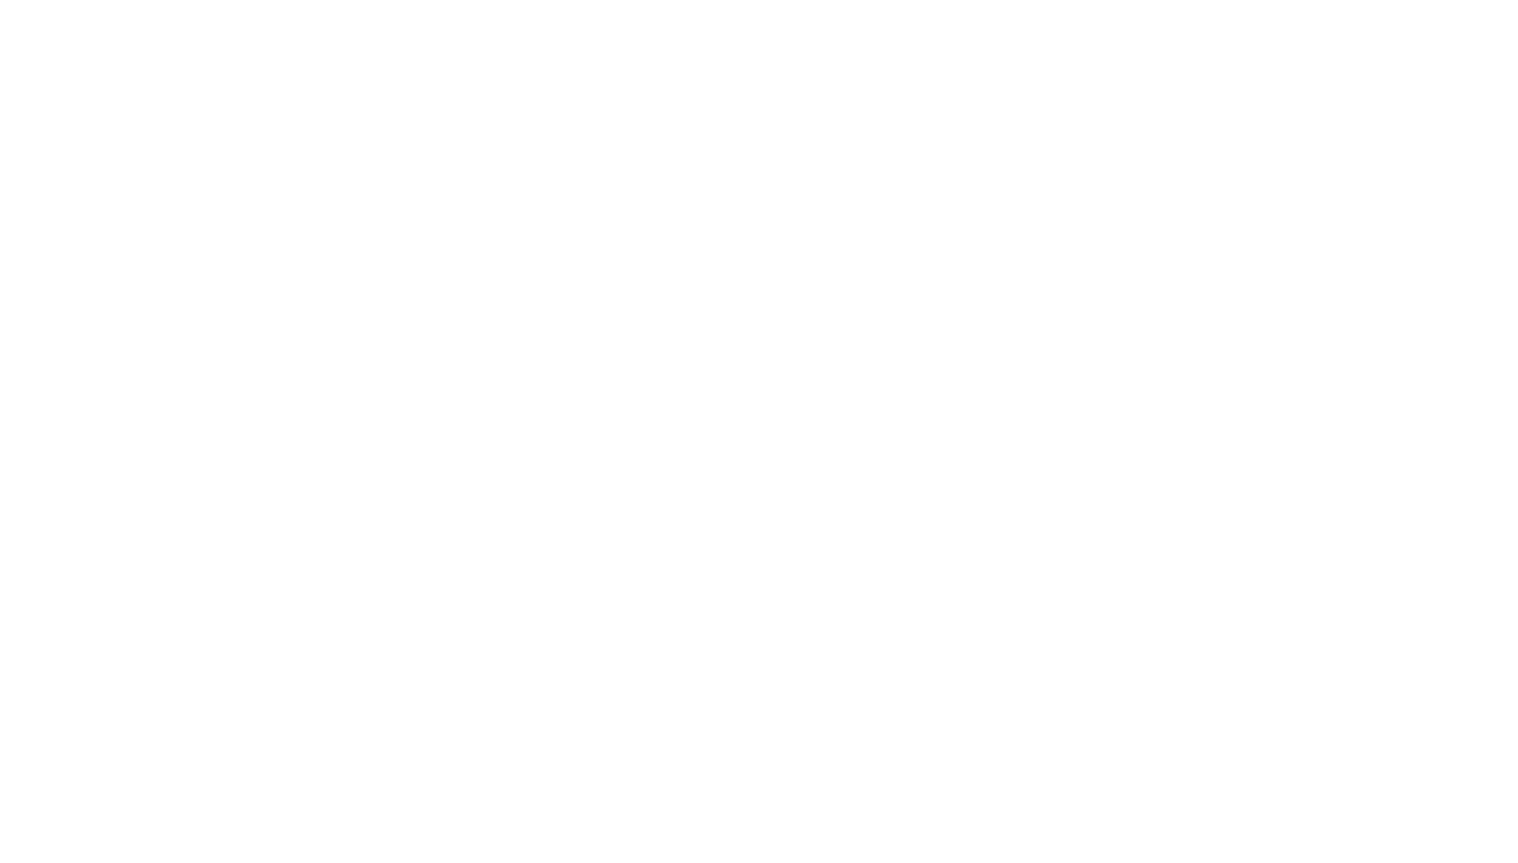 Coulter Dawe & Associates